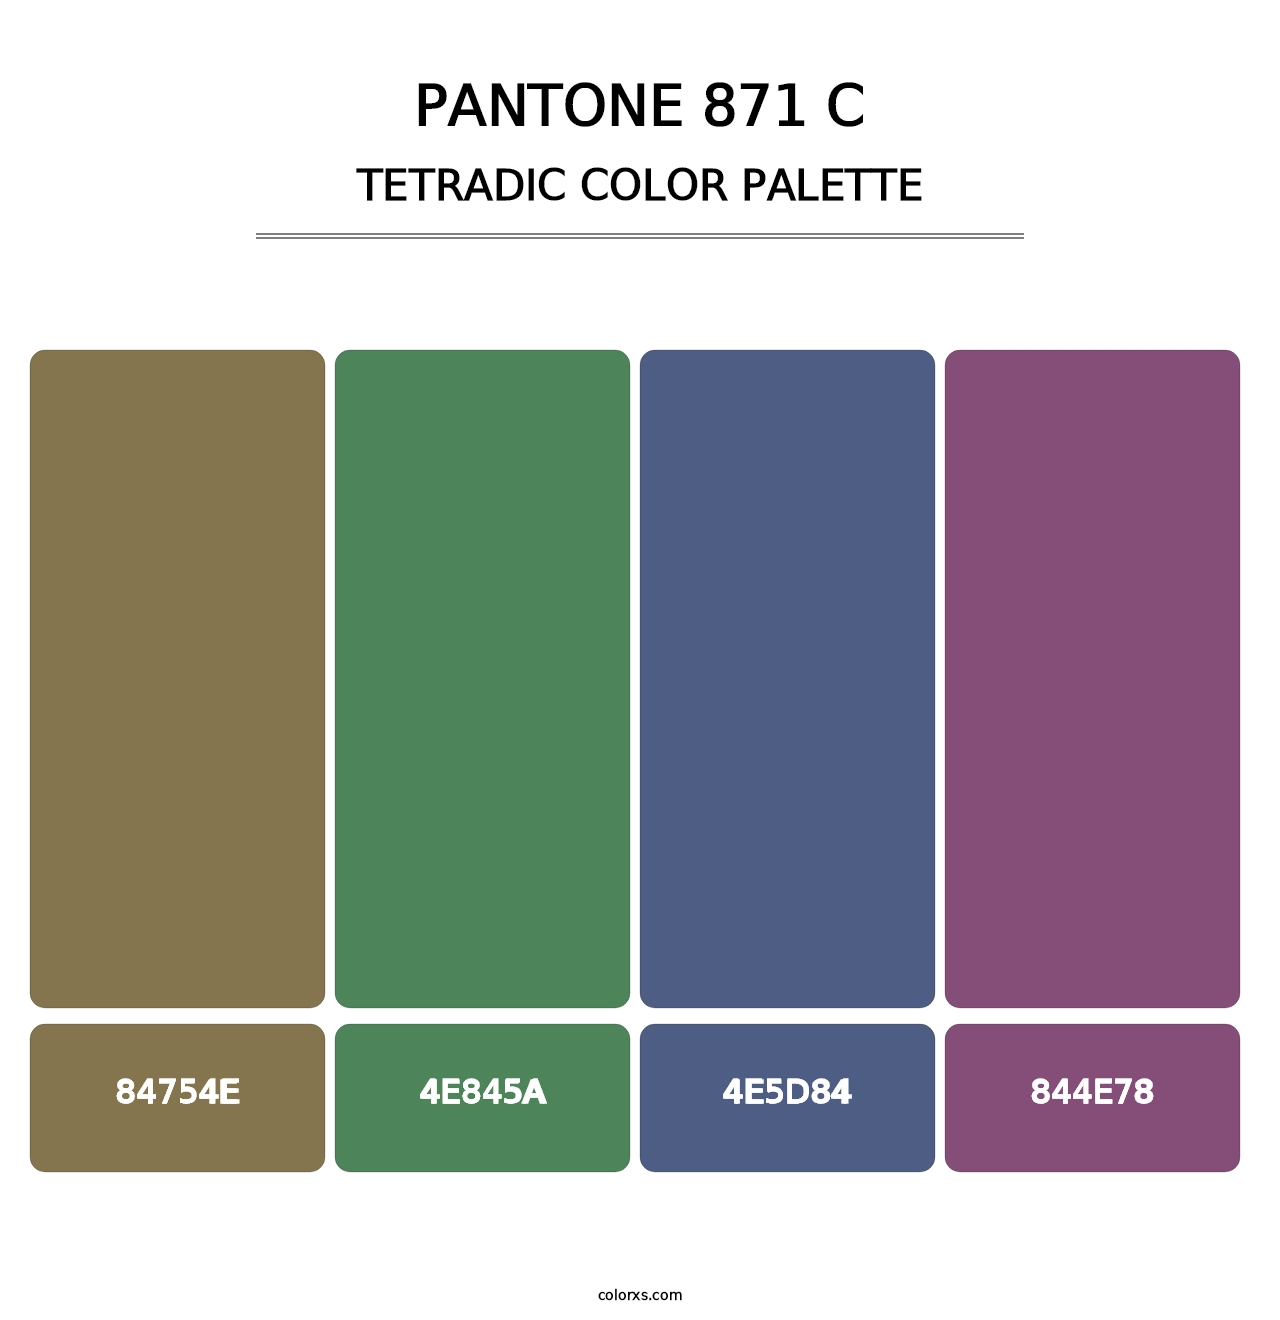 PANTONE 871 C - Tetradic Color Palette